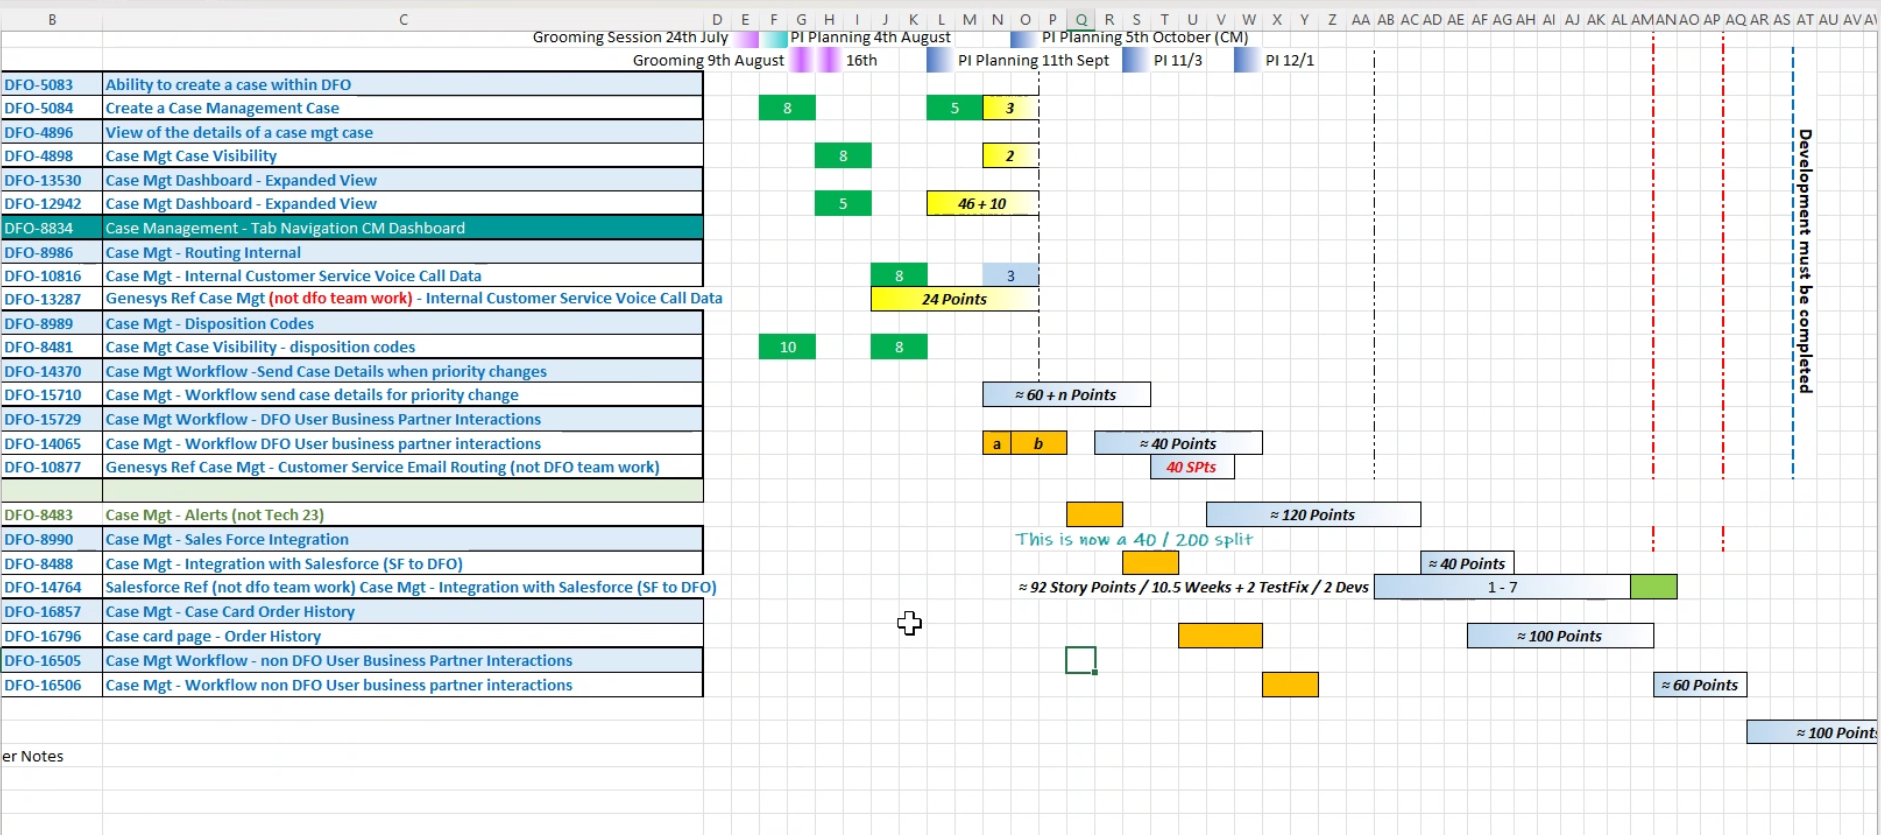 Figure 1 - Screenshot of the Digital Front Office Tech23 Case Management Project Roadmap & Timeline.